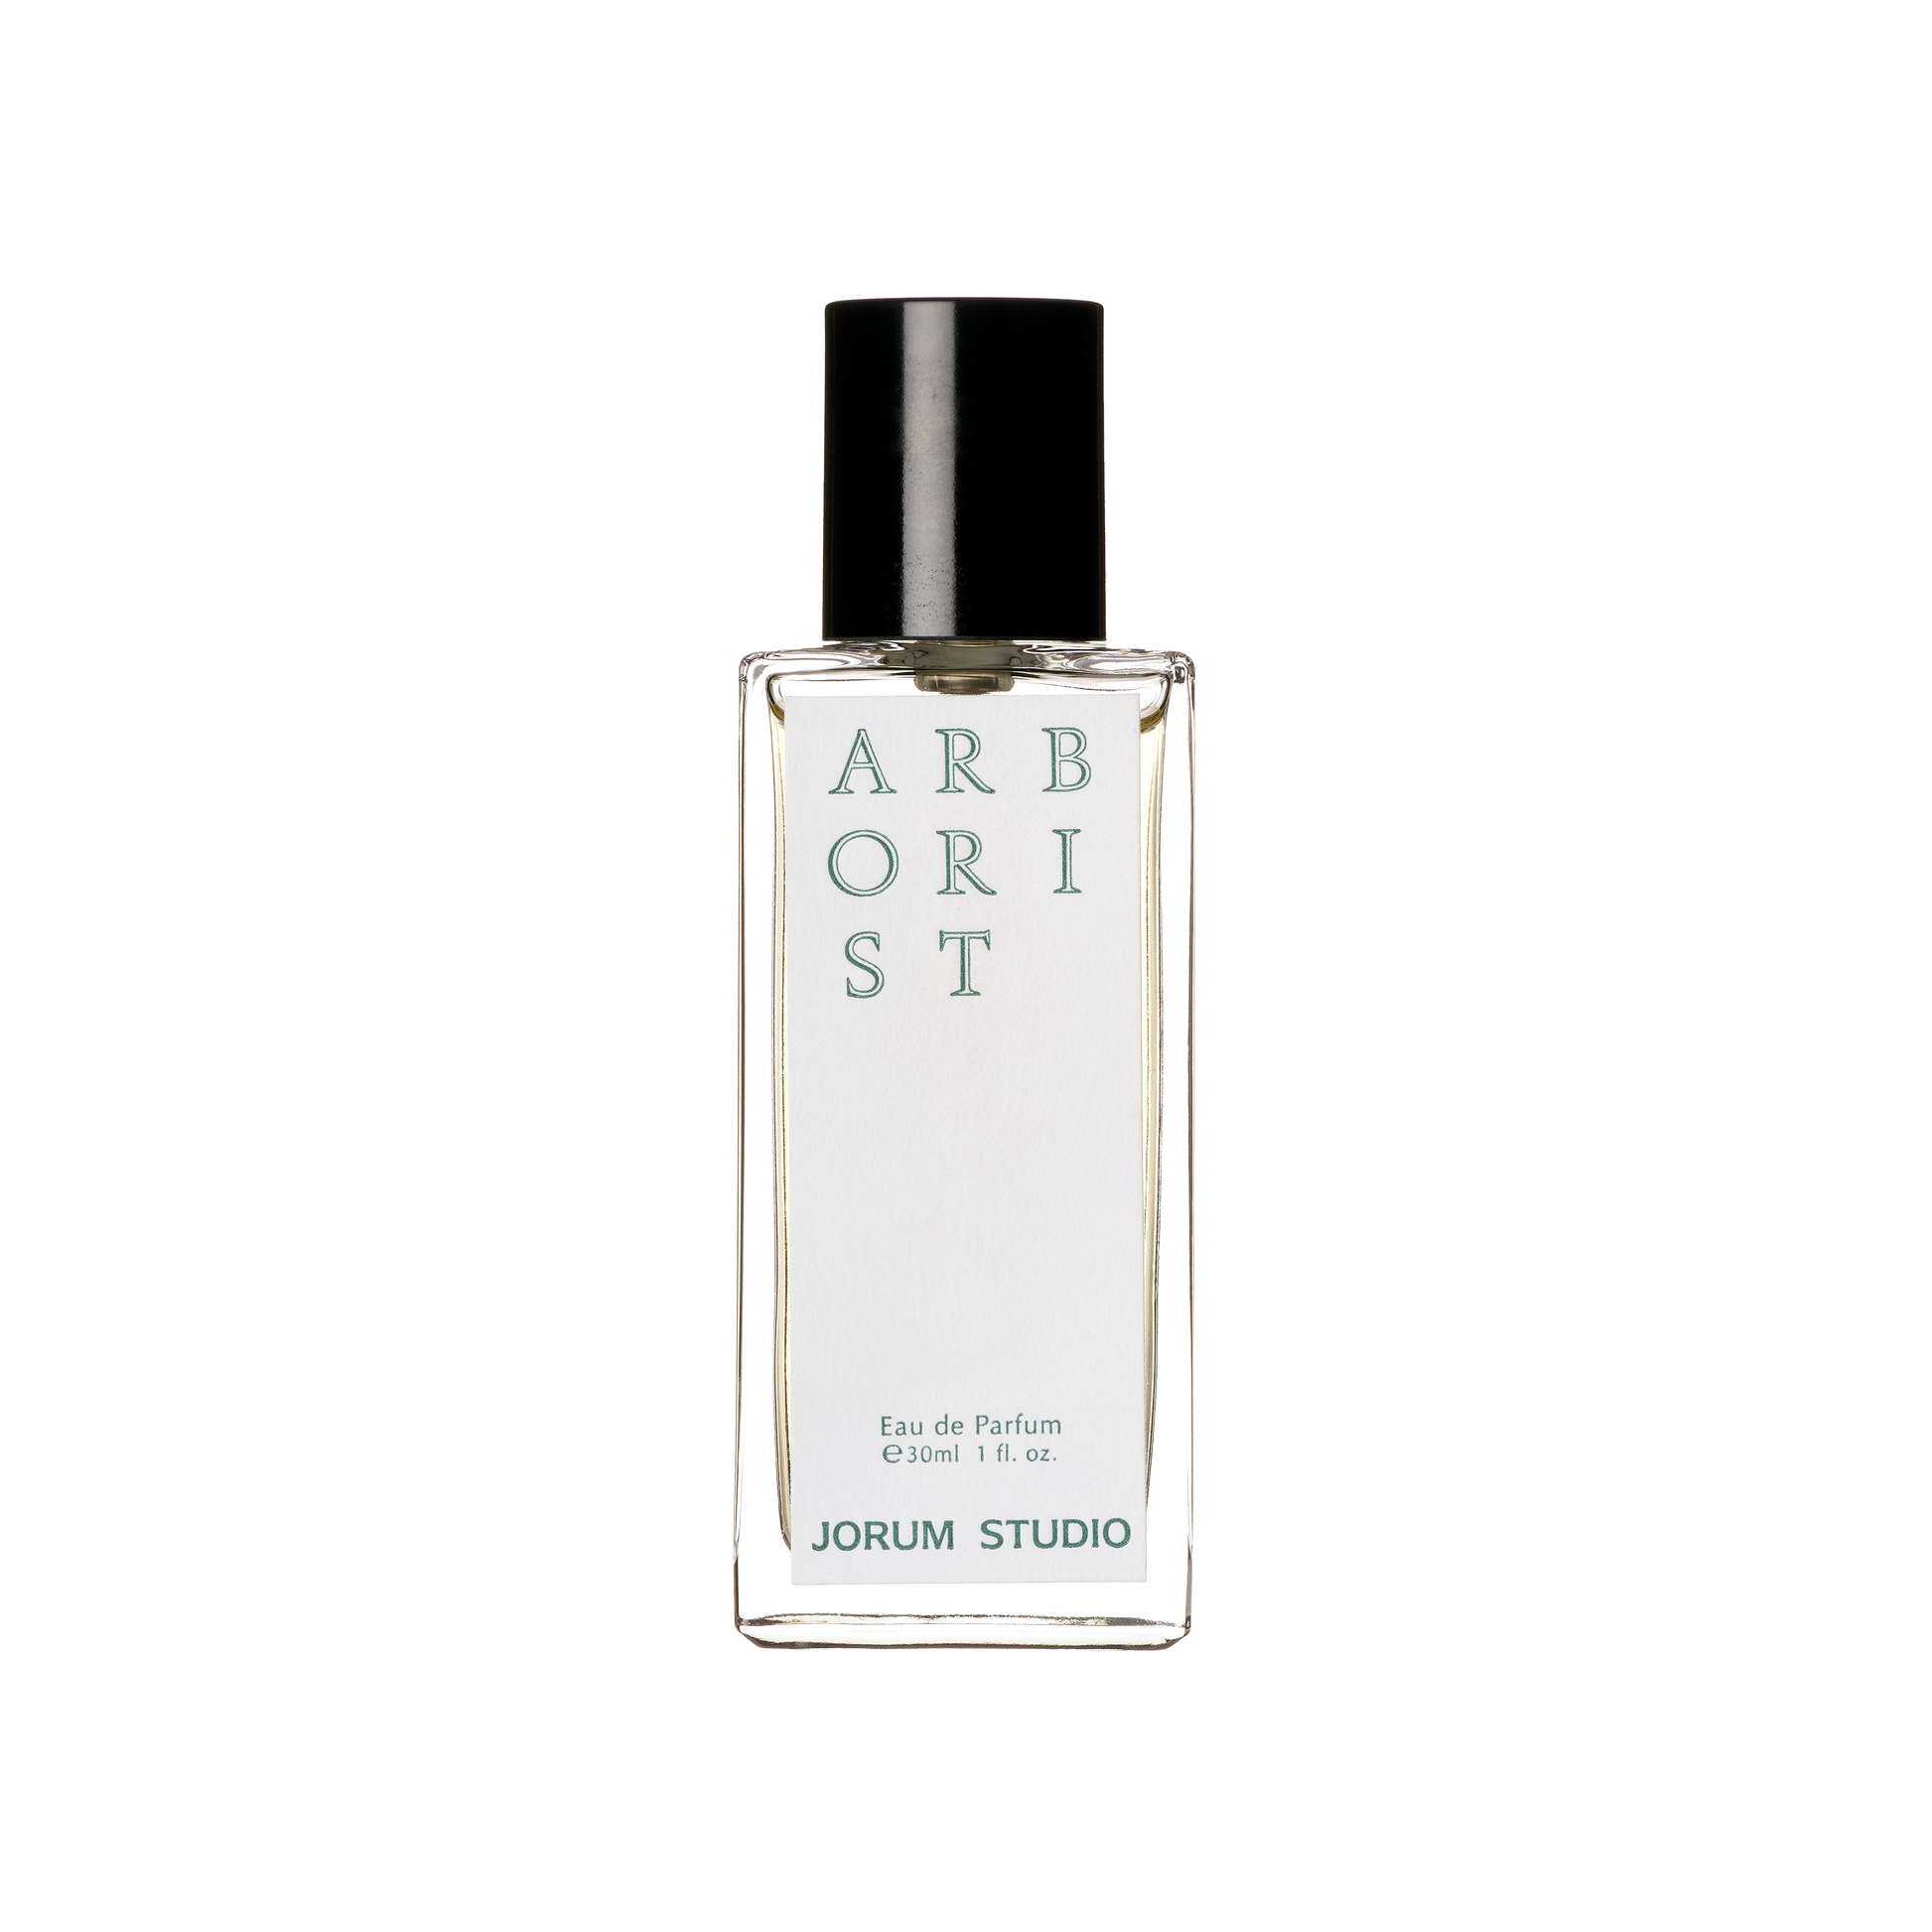 30ml bottle of Arborist Eau de Parfum by Independent Scottish Perfumers Jorum Studio